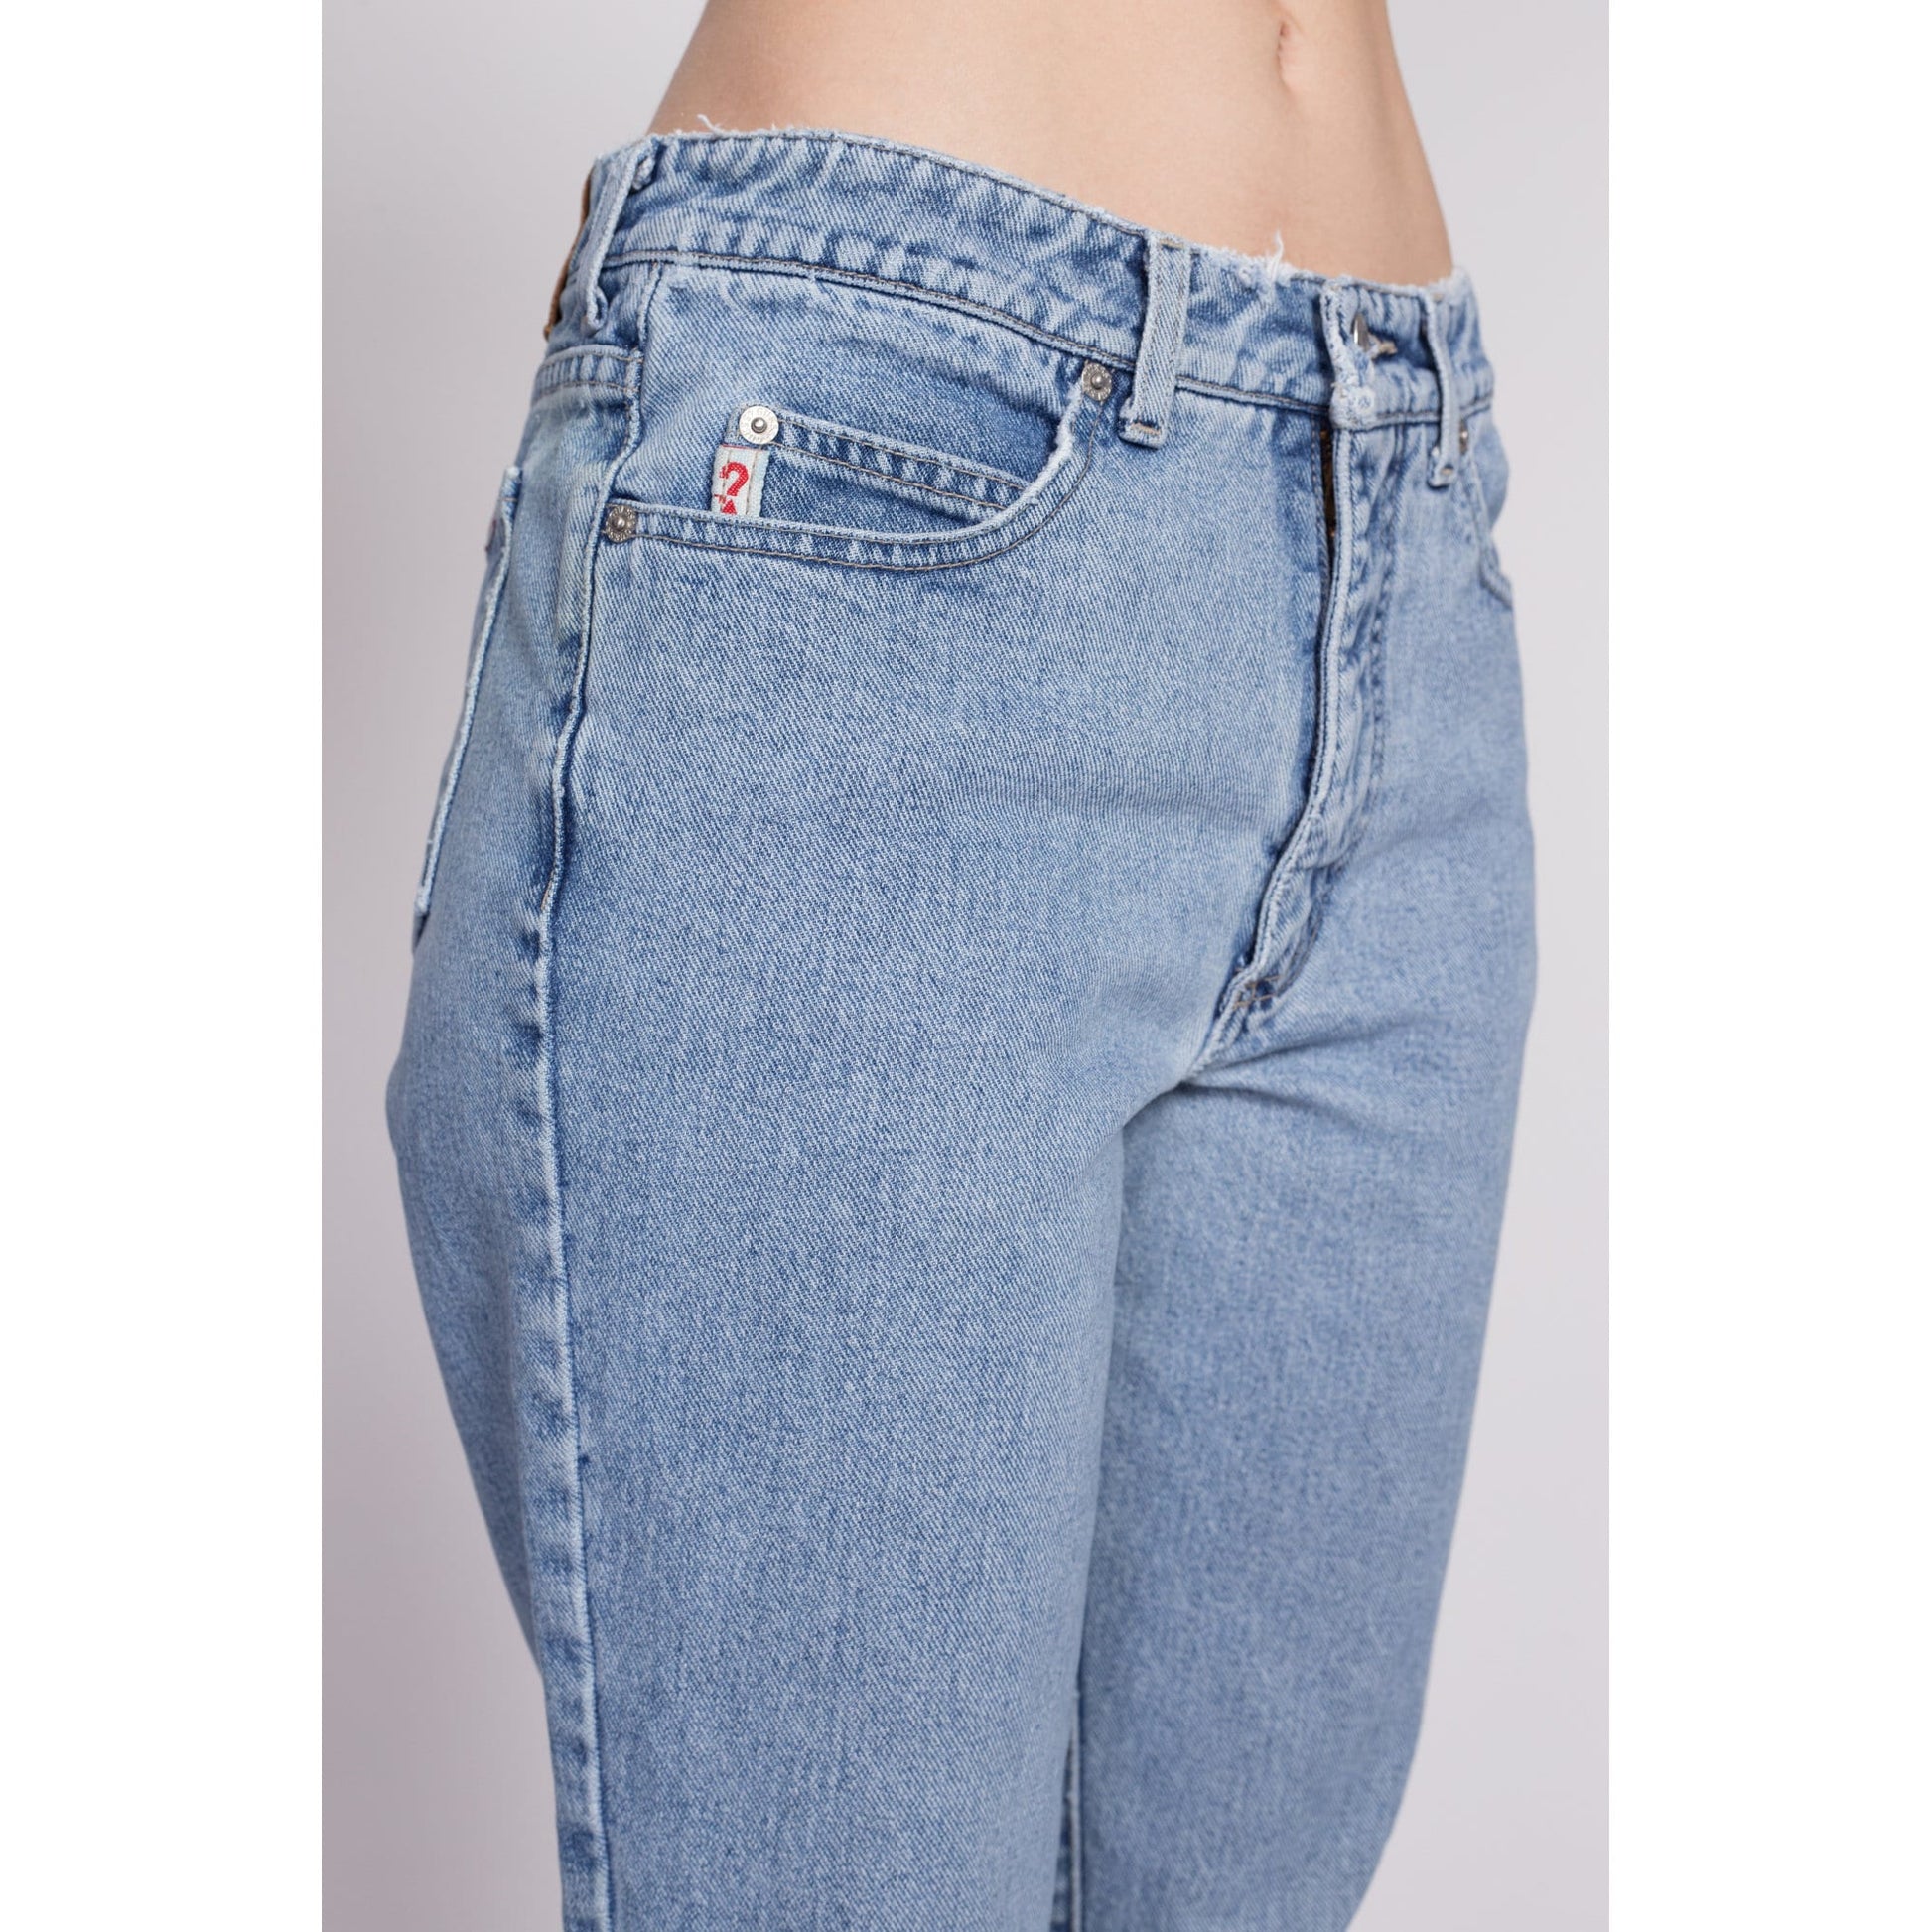 90s Guess Mid Rise Jeans - Small to Medium | Vintage Light Wash Denim Distressed Straight Leg Boyfriend Jeans